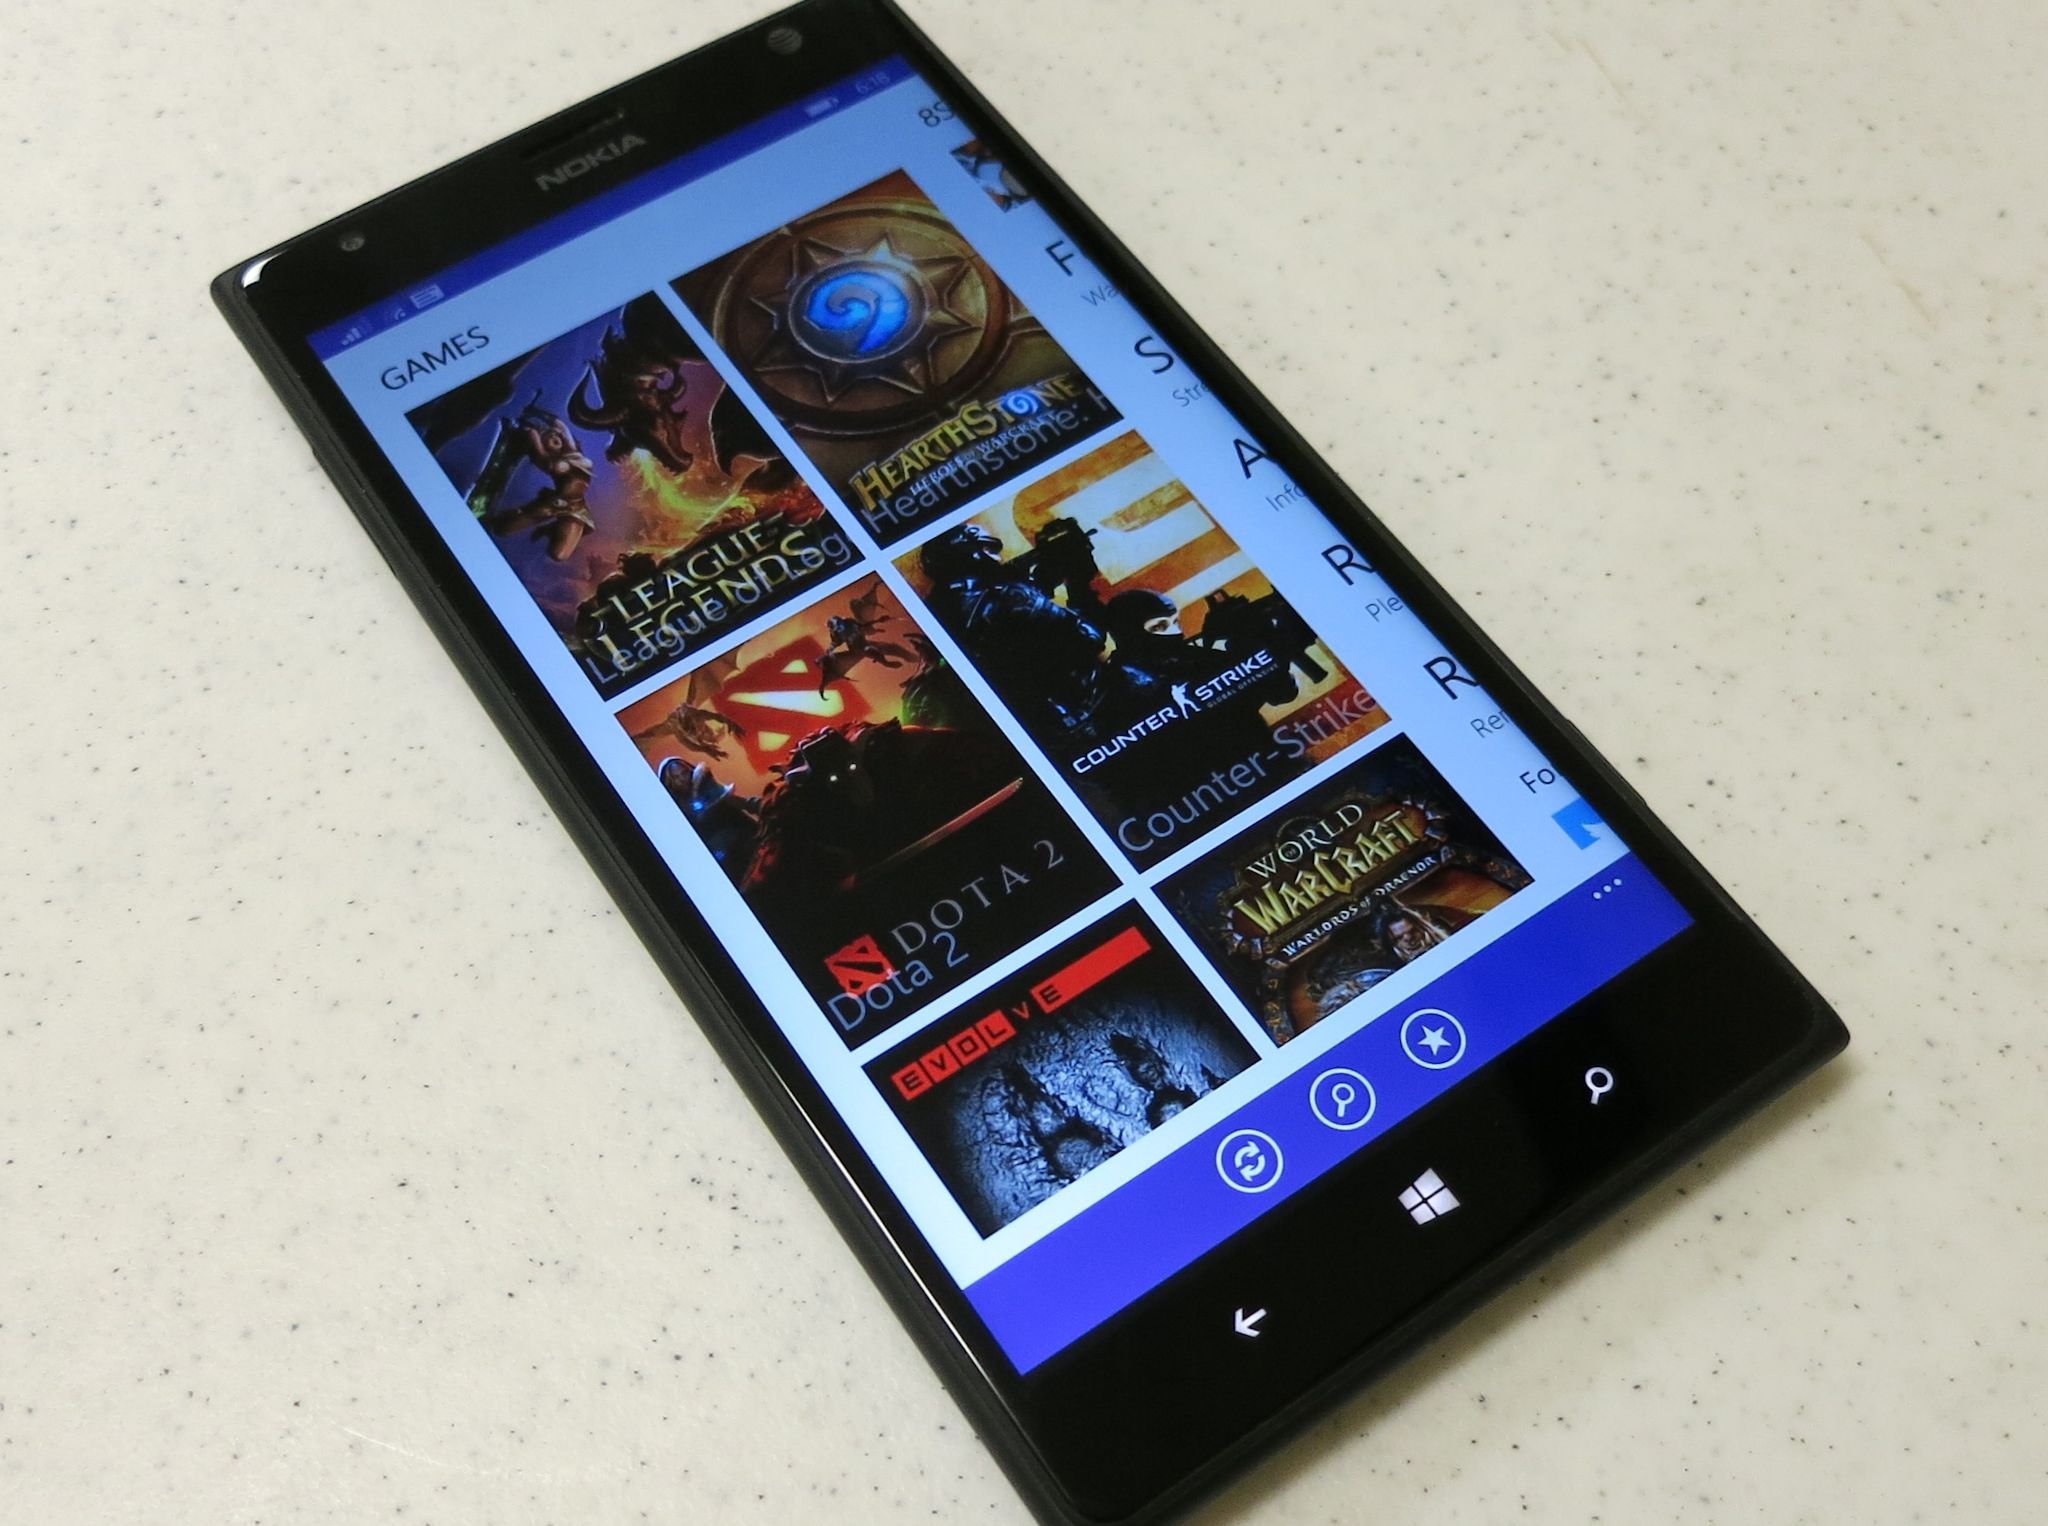 Unofficial Twitch Windows Phone app roundup - 8Stream running on Lumia 1520